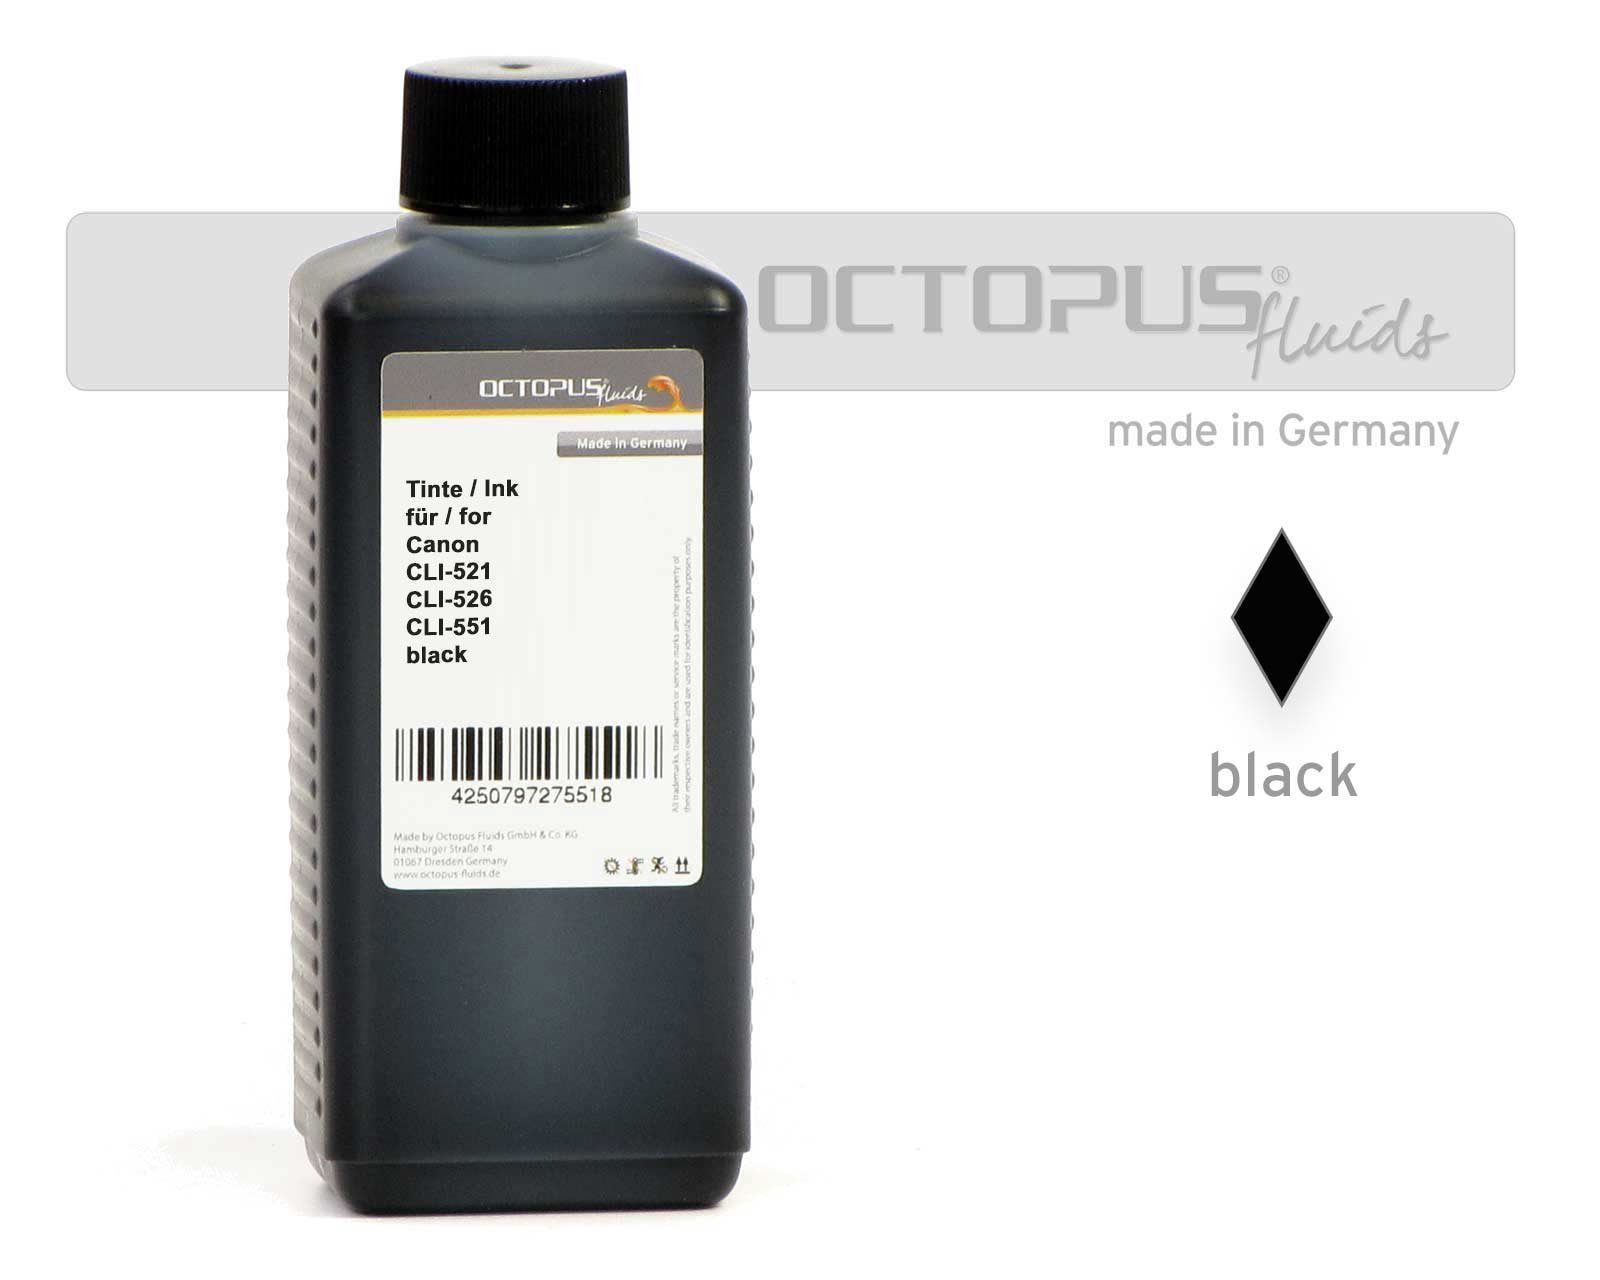 OCTOPUS Fluids Druckertinte Canon CLI-521, CLI-526, CLI-551 schwarz Nachfülltinte (für Canon, 1x 100 ml)